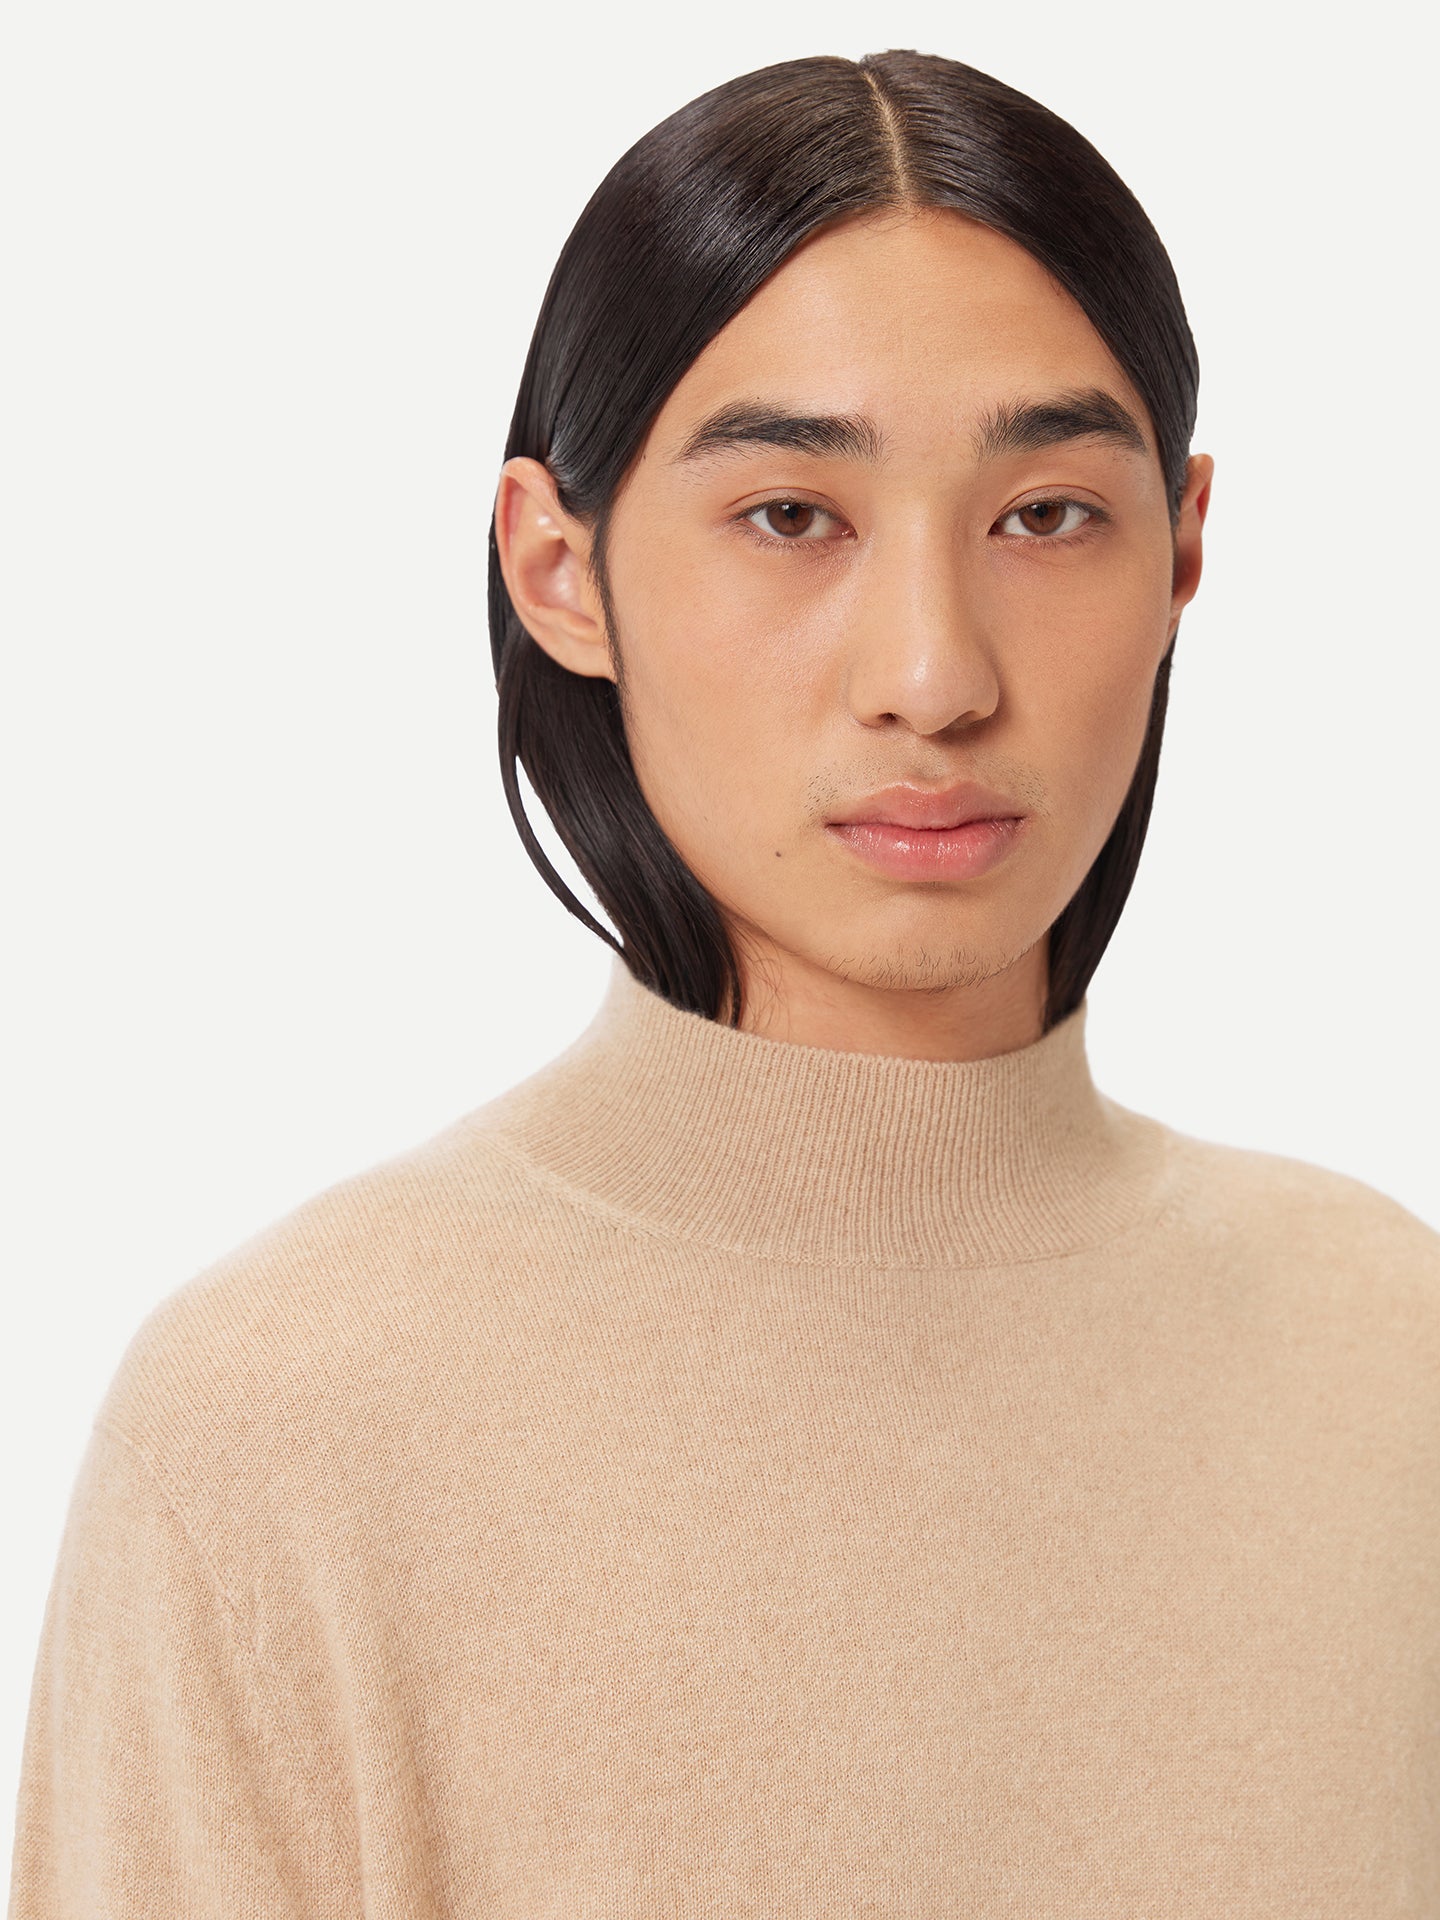 Men's Organic Colour Cashmere Mock Neck Sweater Beige - Gobi Cashmere